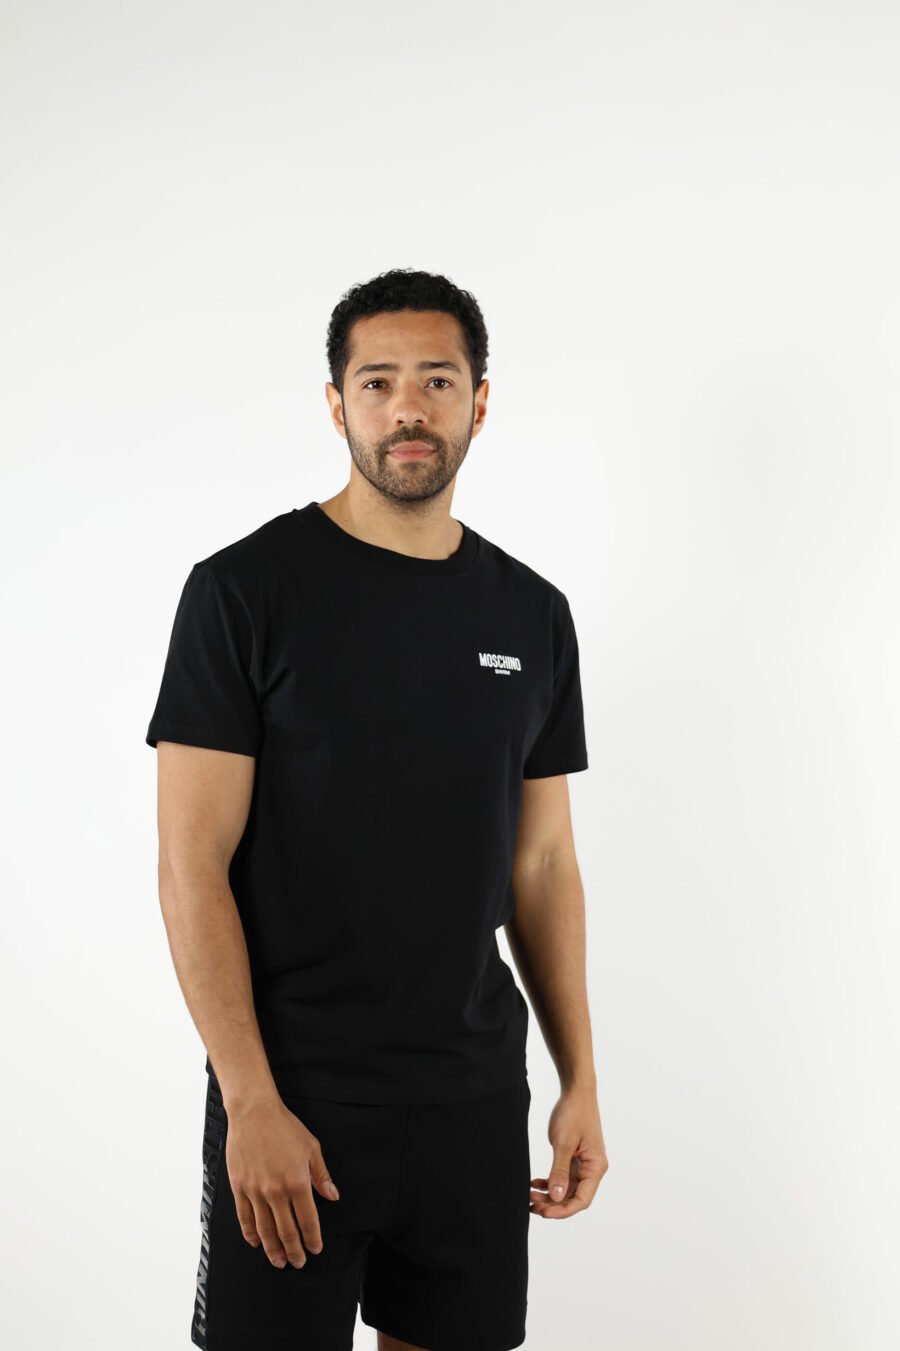 Black T-shirt with minilogue "swim" - 111054